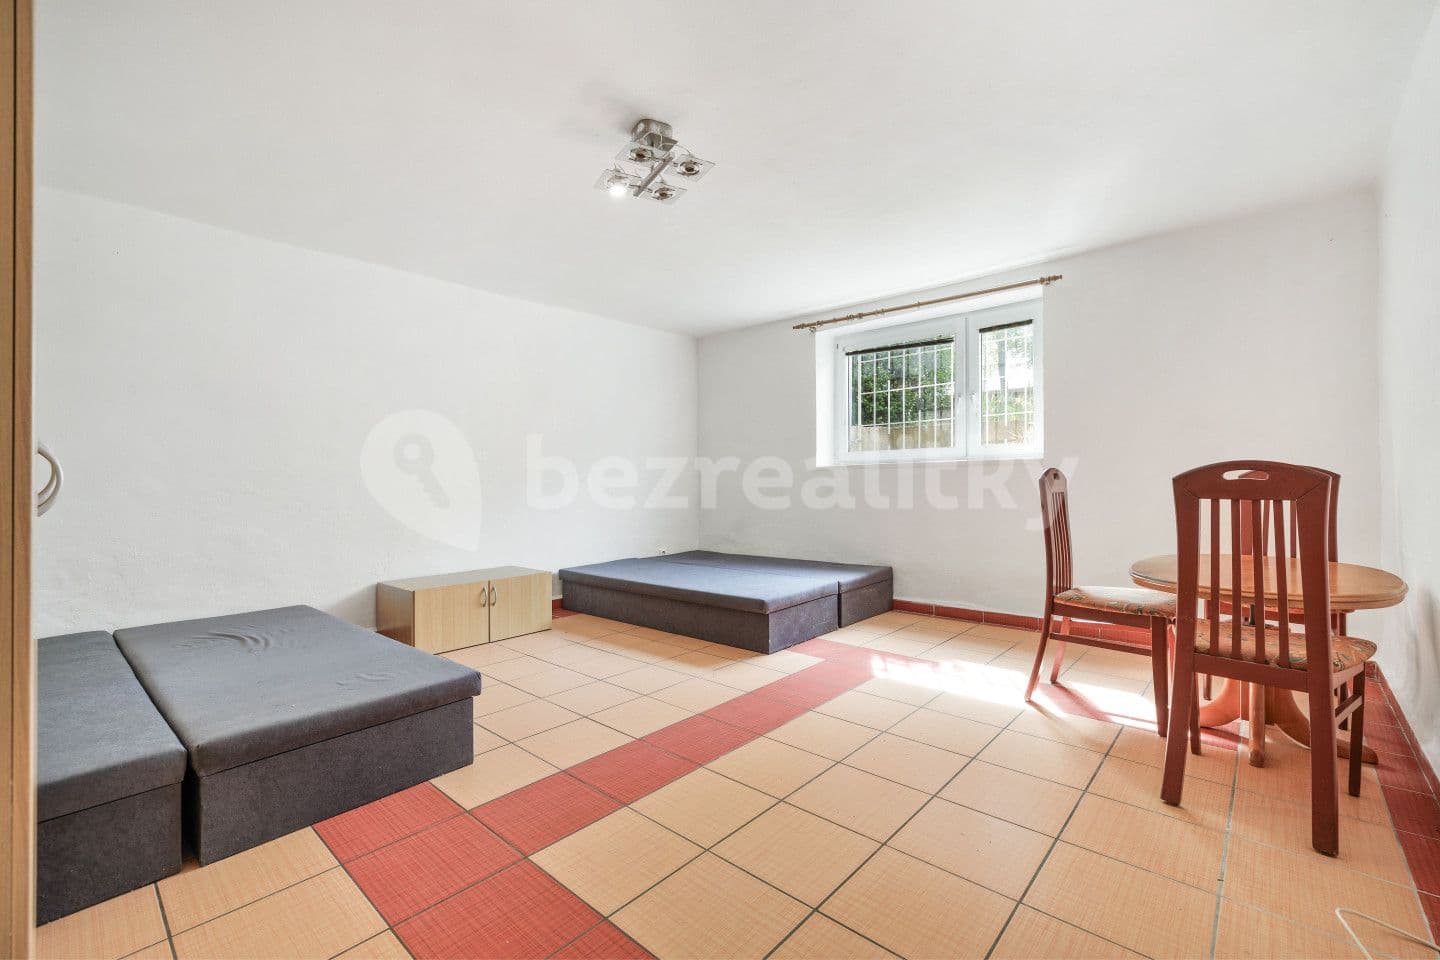 1 bedroom with open-plan kitchen flat for sale, 62 m², Královická, Prague, Prague